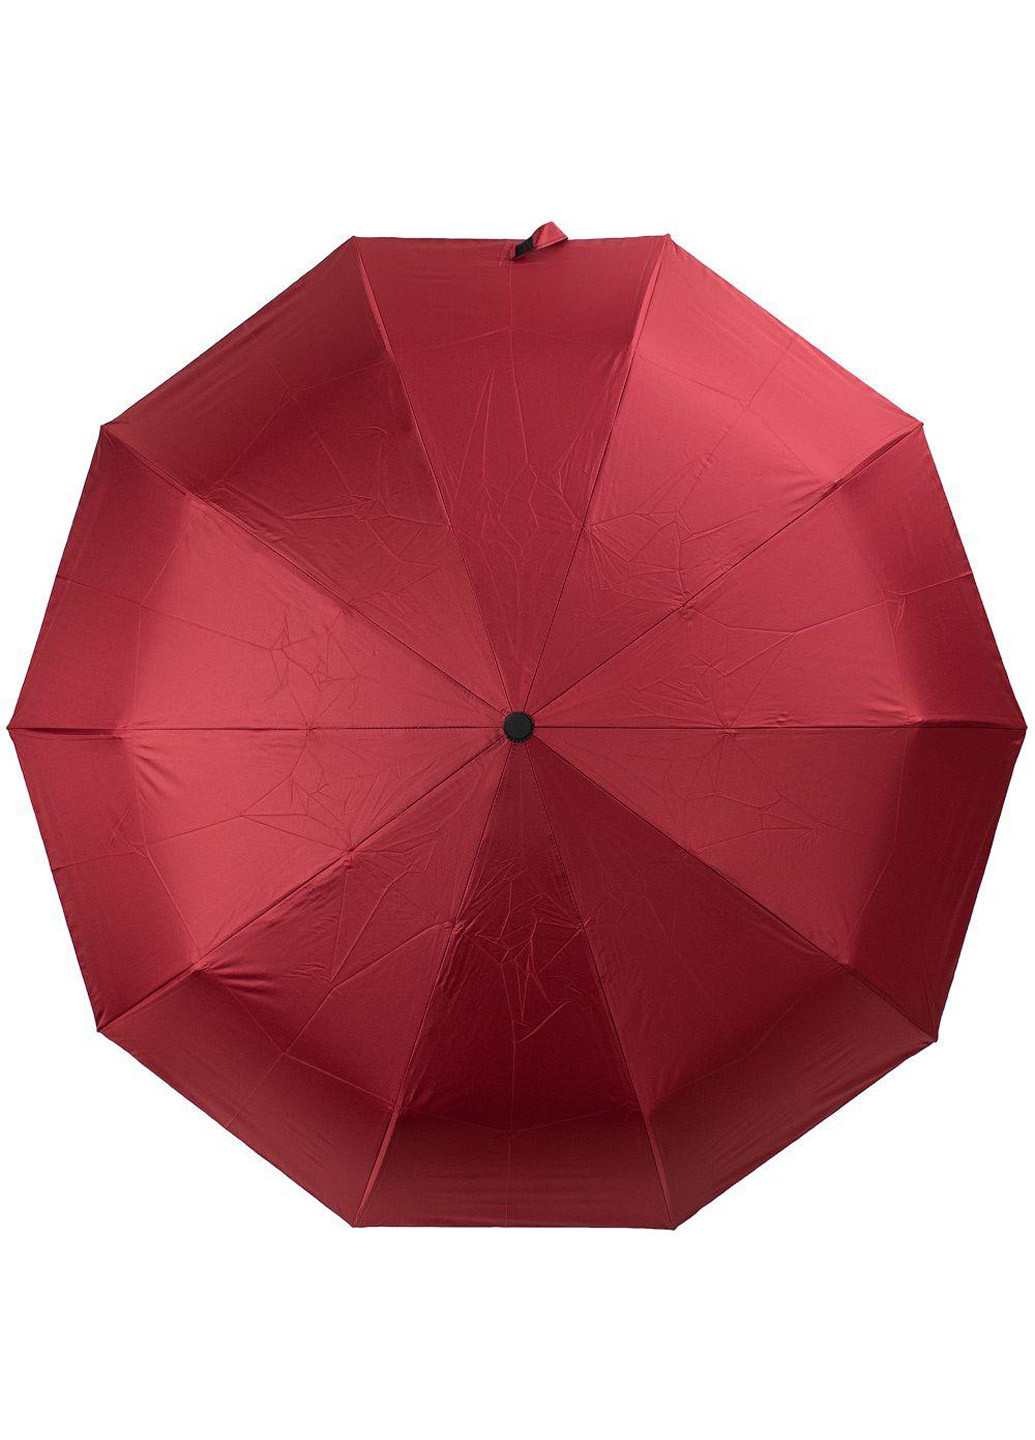 Жіночий складаний парасолька повний автомат 103 см Eterno (205132305)